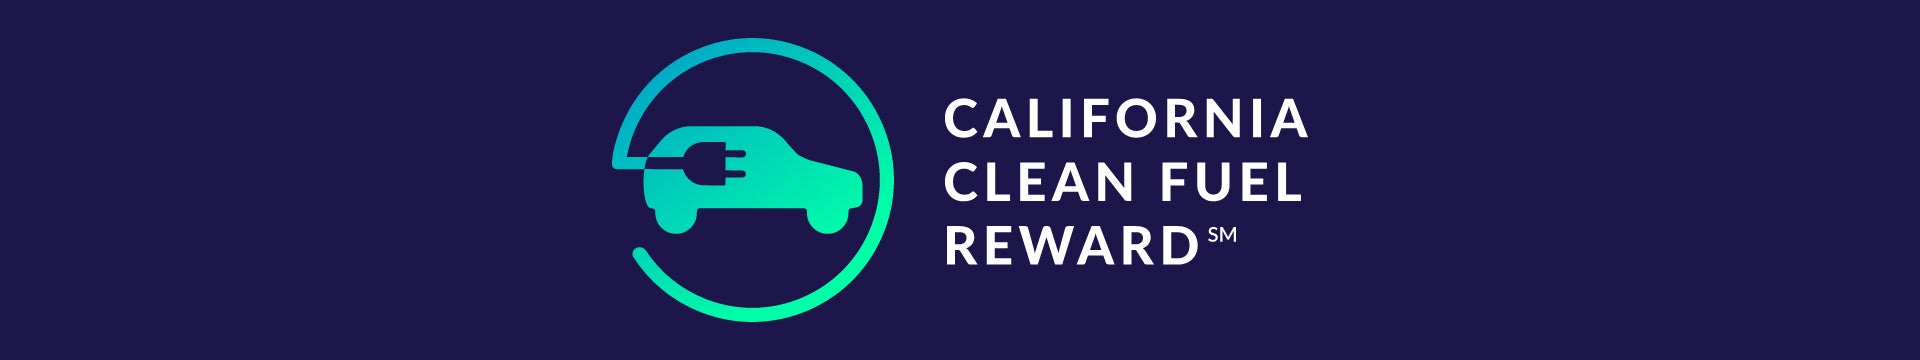 California Clean Fuel Reward Program Logo